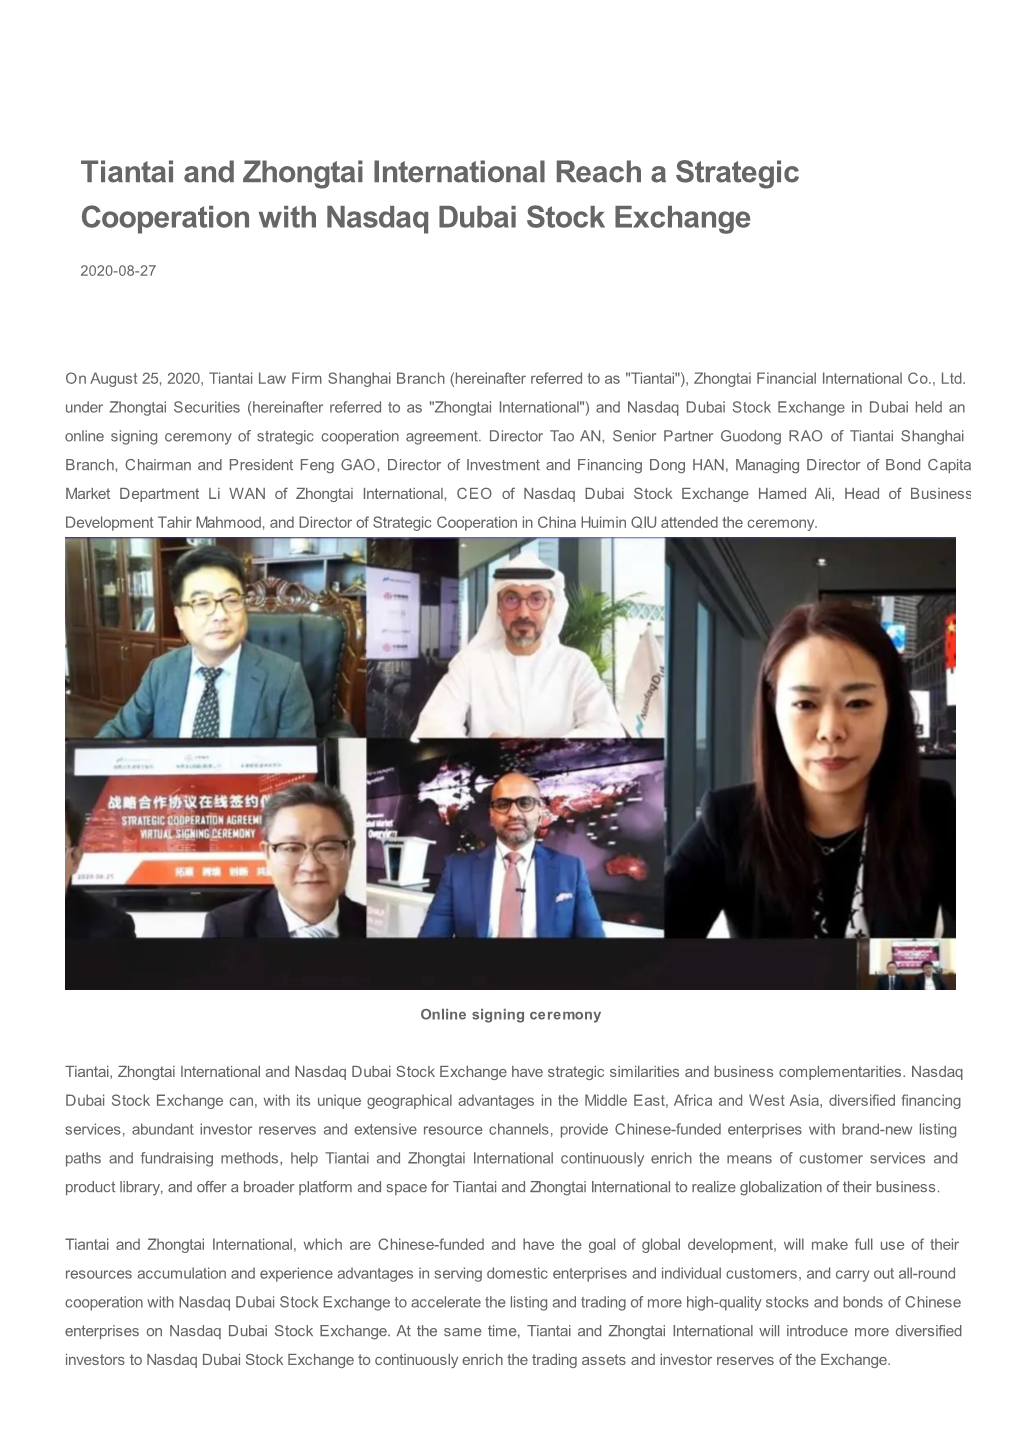 Tiantai and Zhongtai International Reach a Strategic Cooperation with Nasdaq Dubai Stock Exchange